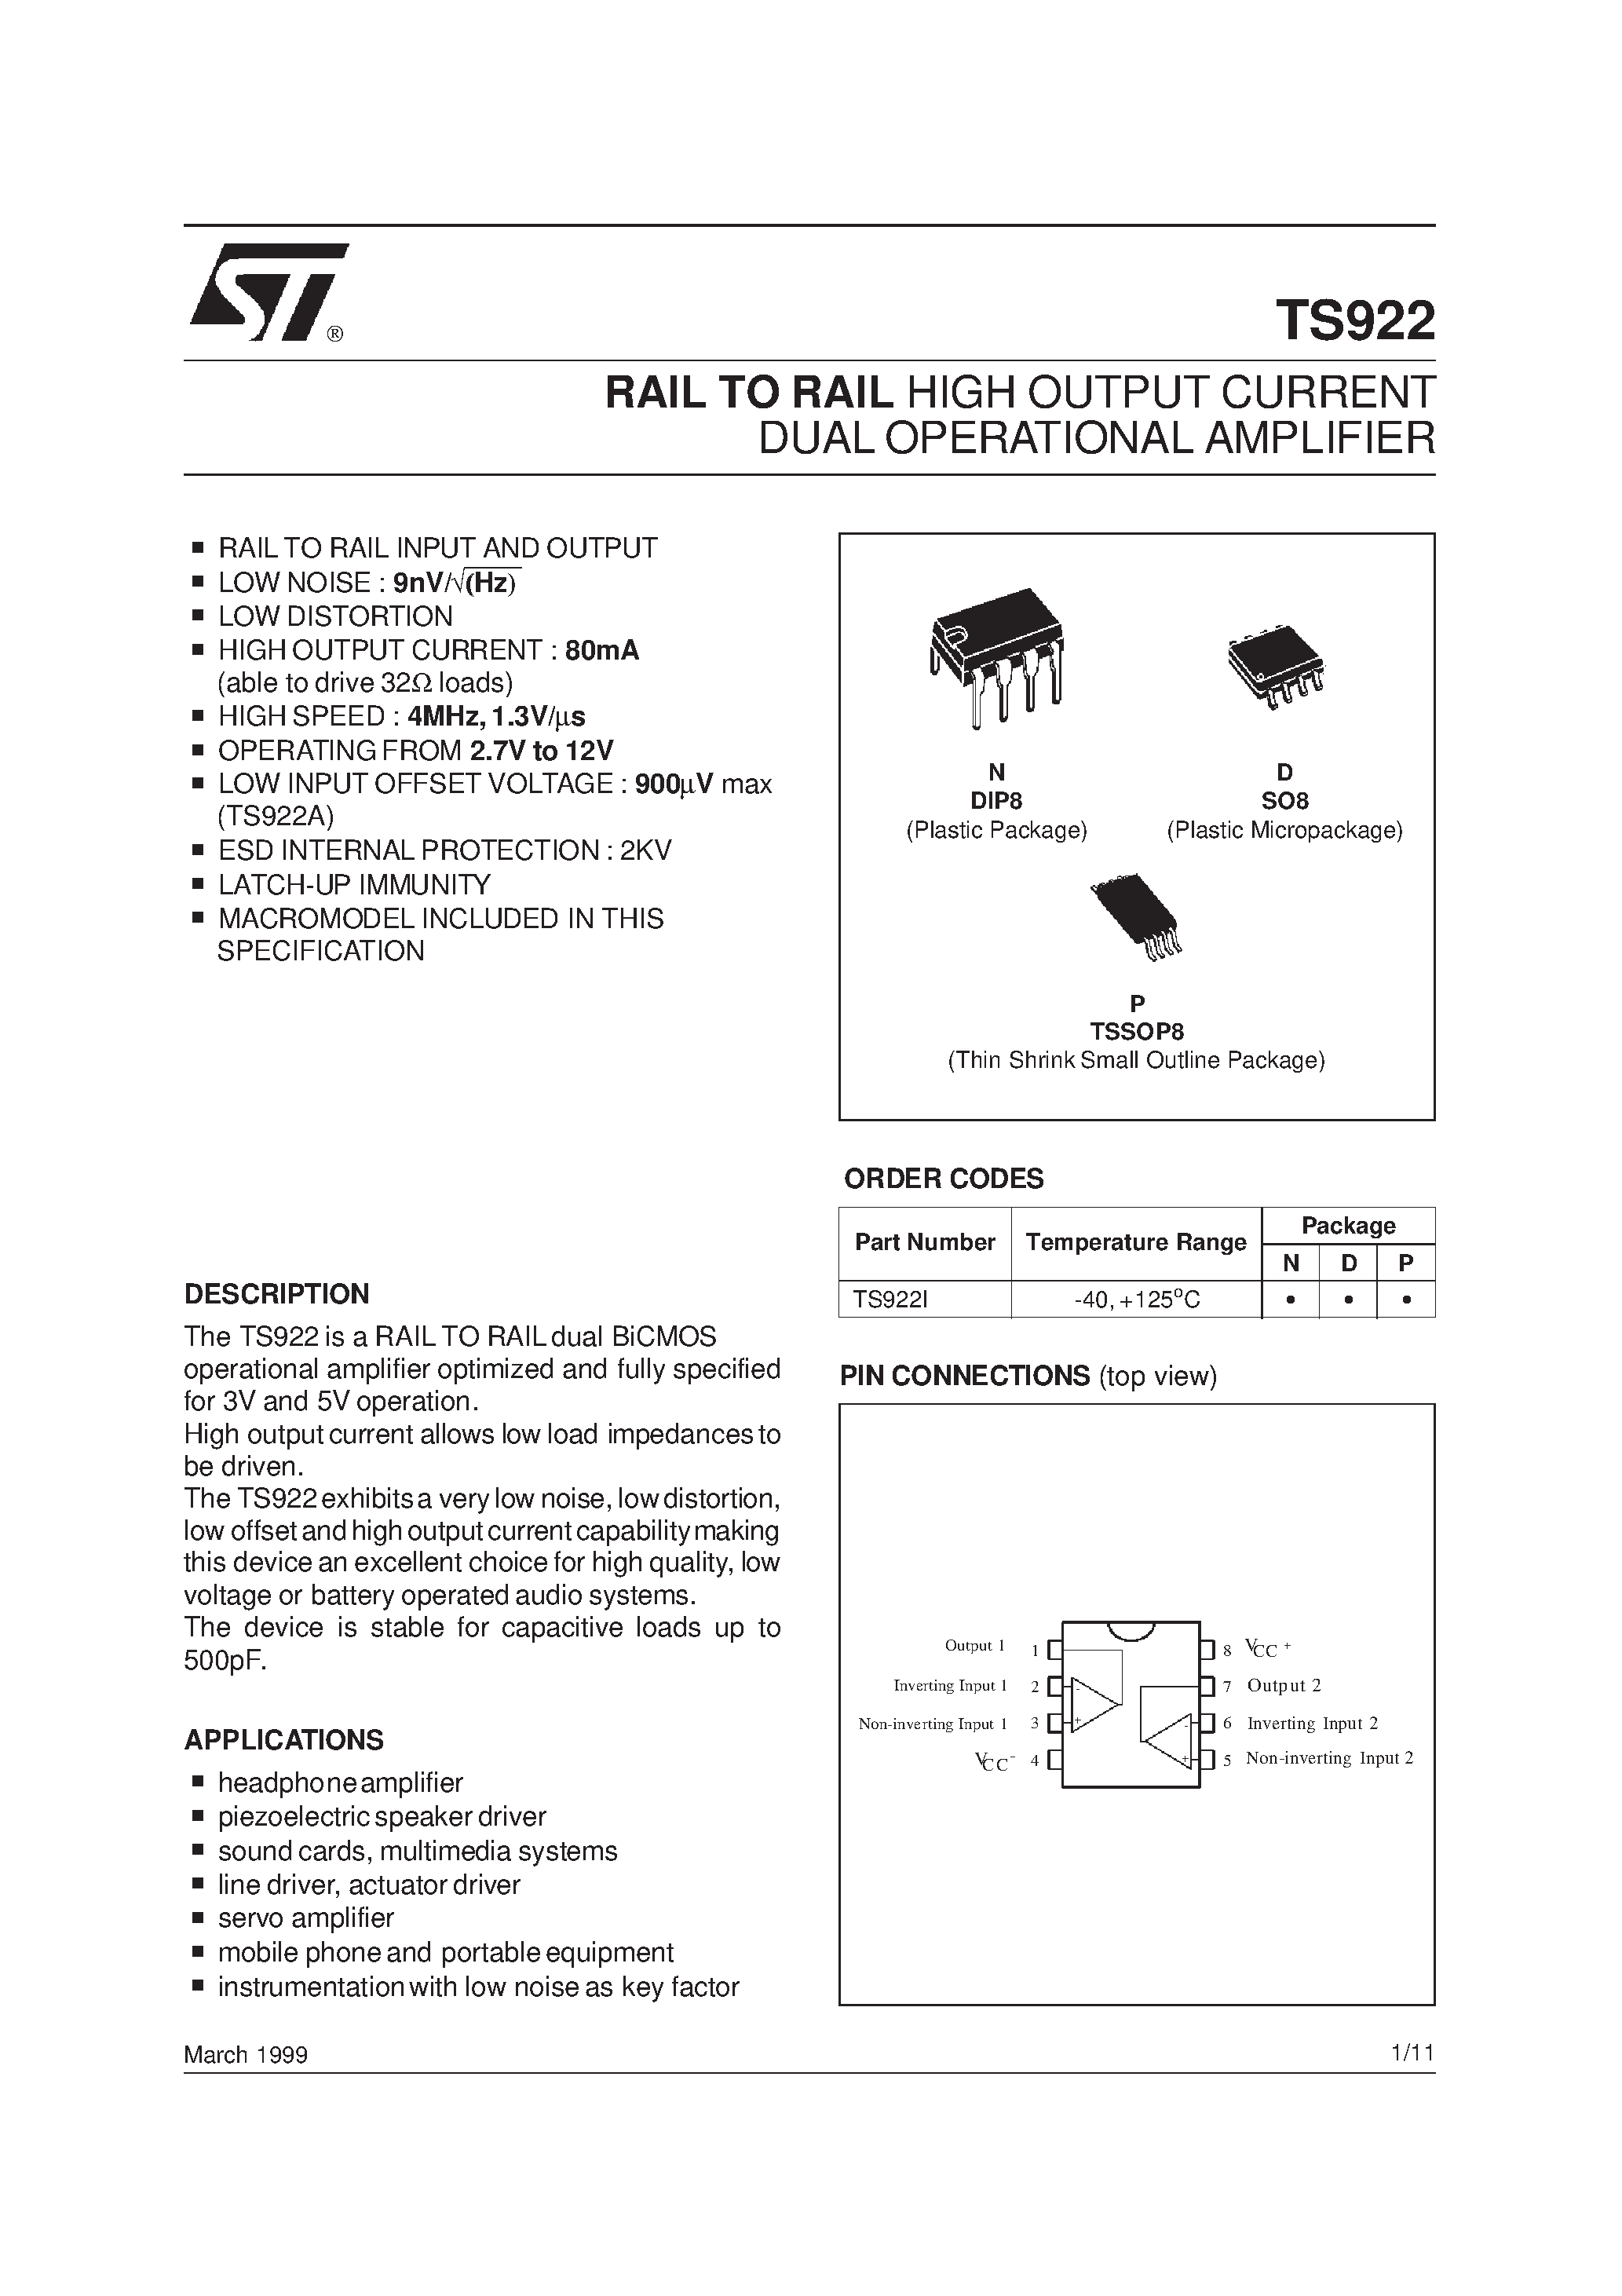 Даташит TS922 - RAIL TO RAIL HIGH OUTPUT CURRENT QUAD OPERATIONAL AMPLIFIER страница 1